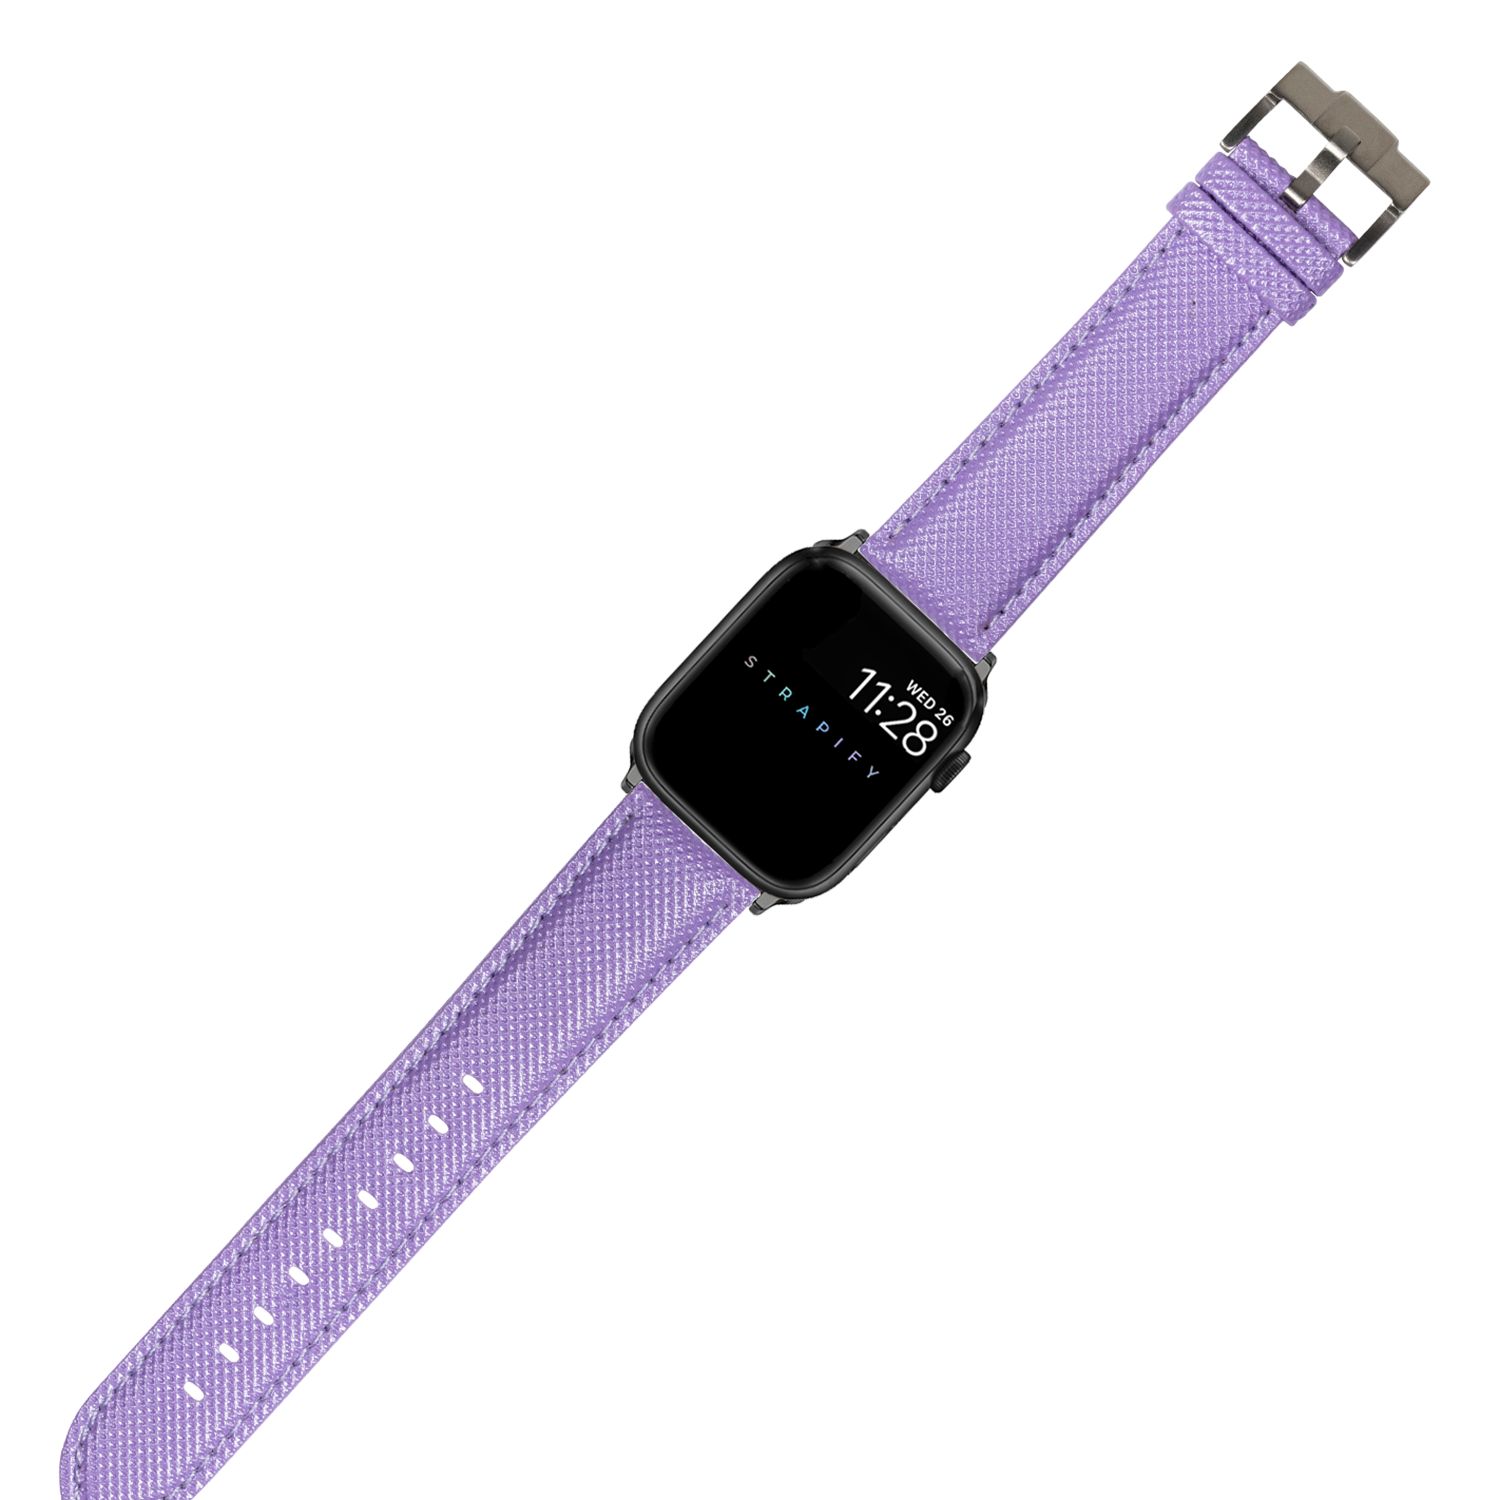 [Apple Watch] Sailcloth - Lavender